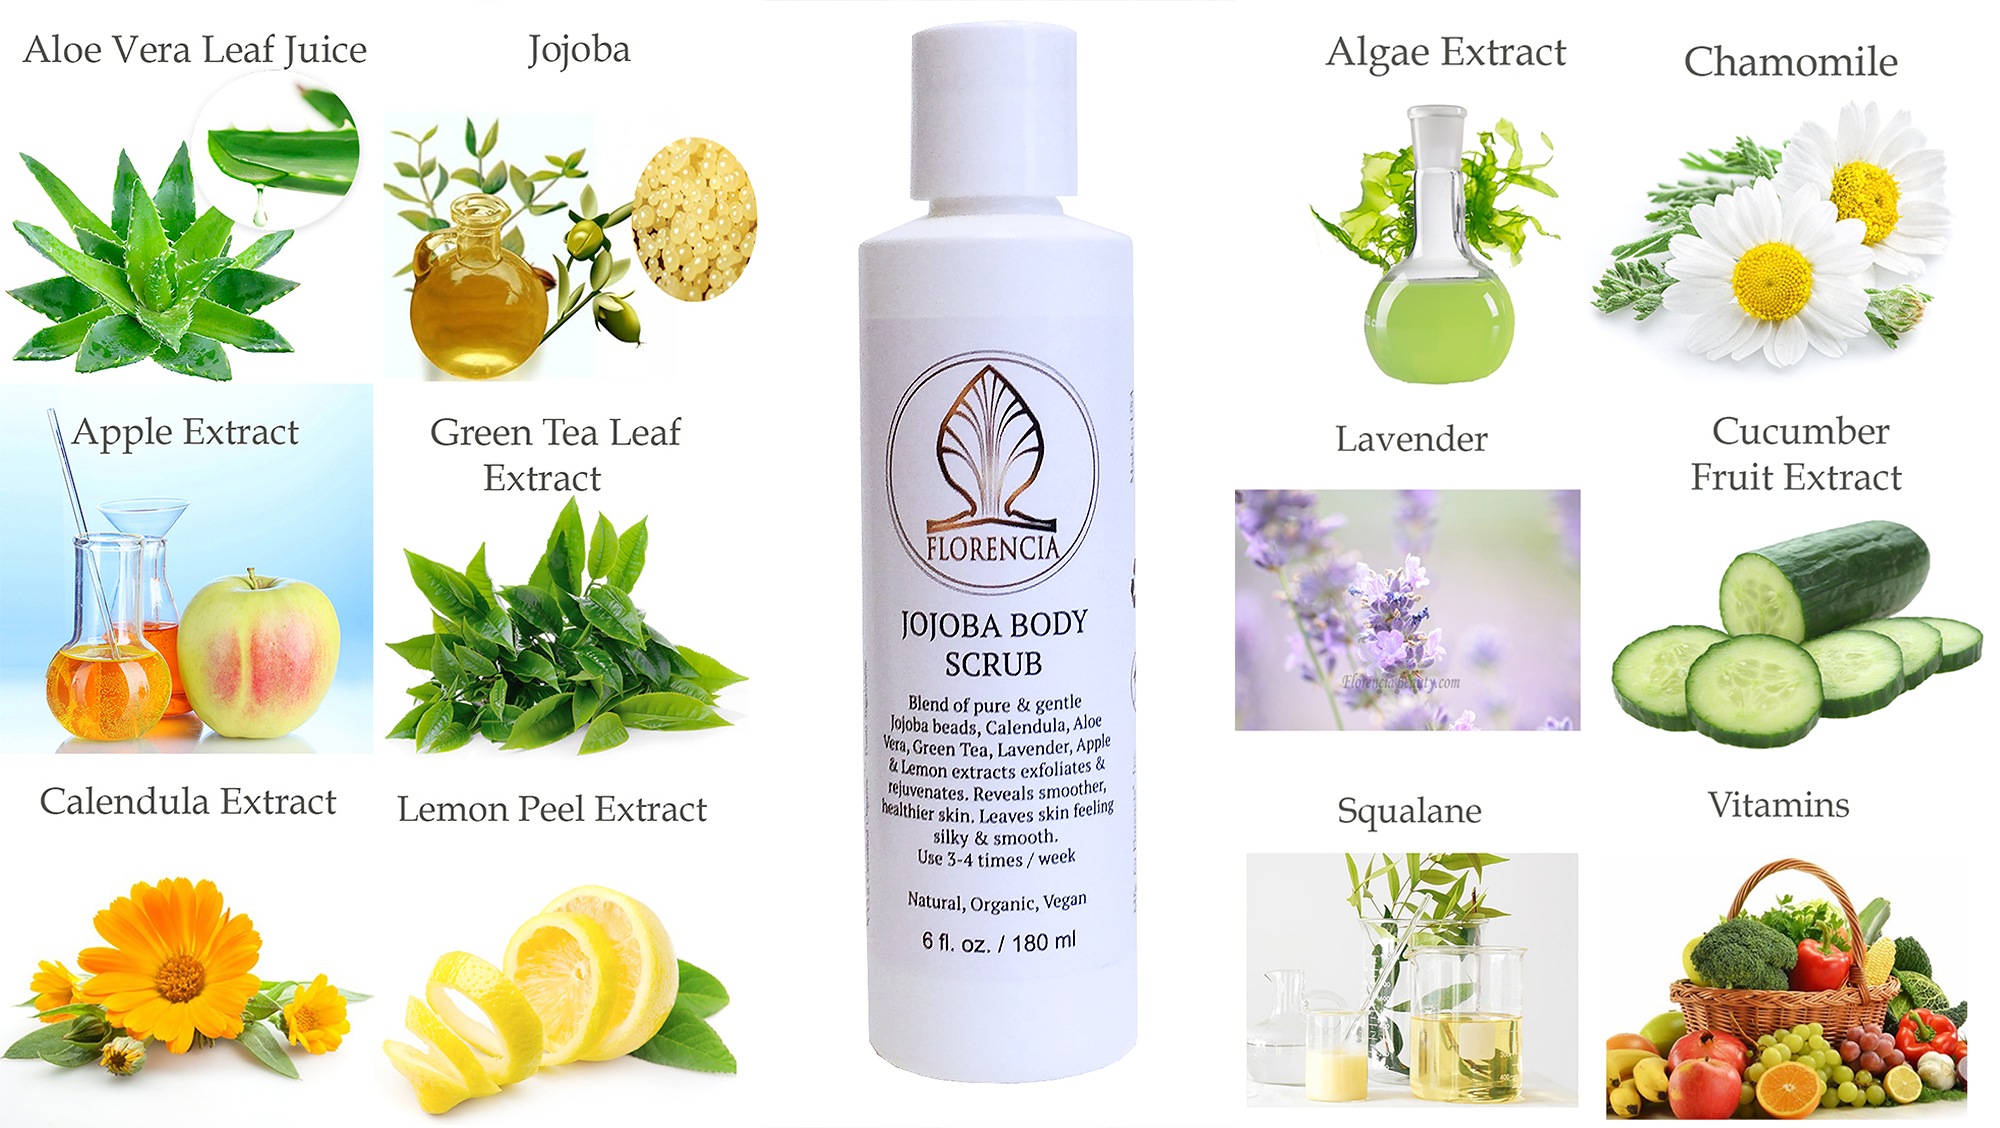 Jojoba Body Scrub bottle and images of ingredients such as lemon peel extract, jojoba, algae extract, lavender and more.